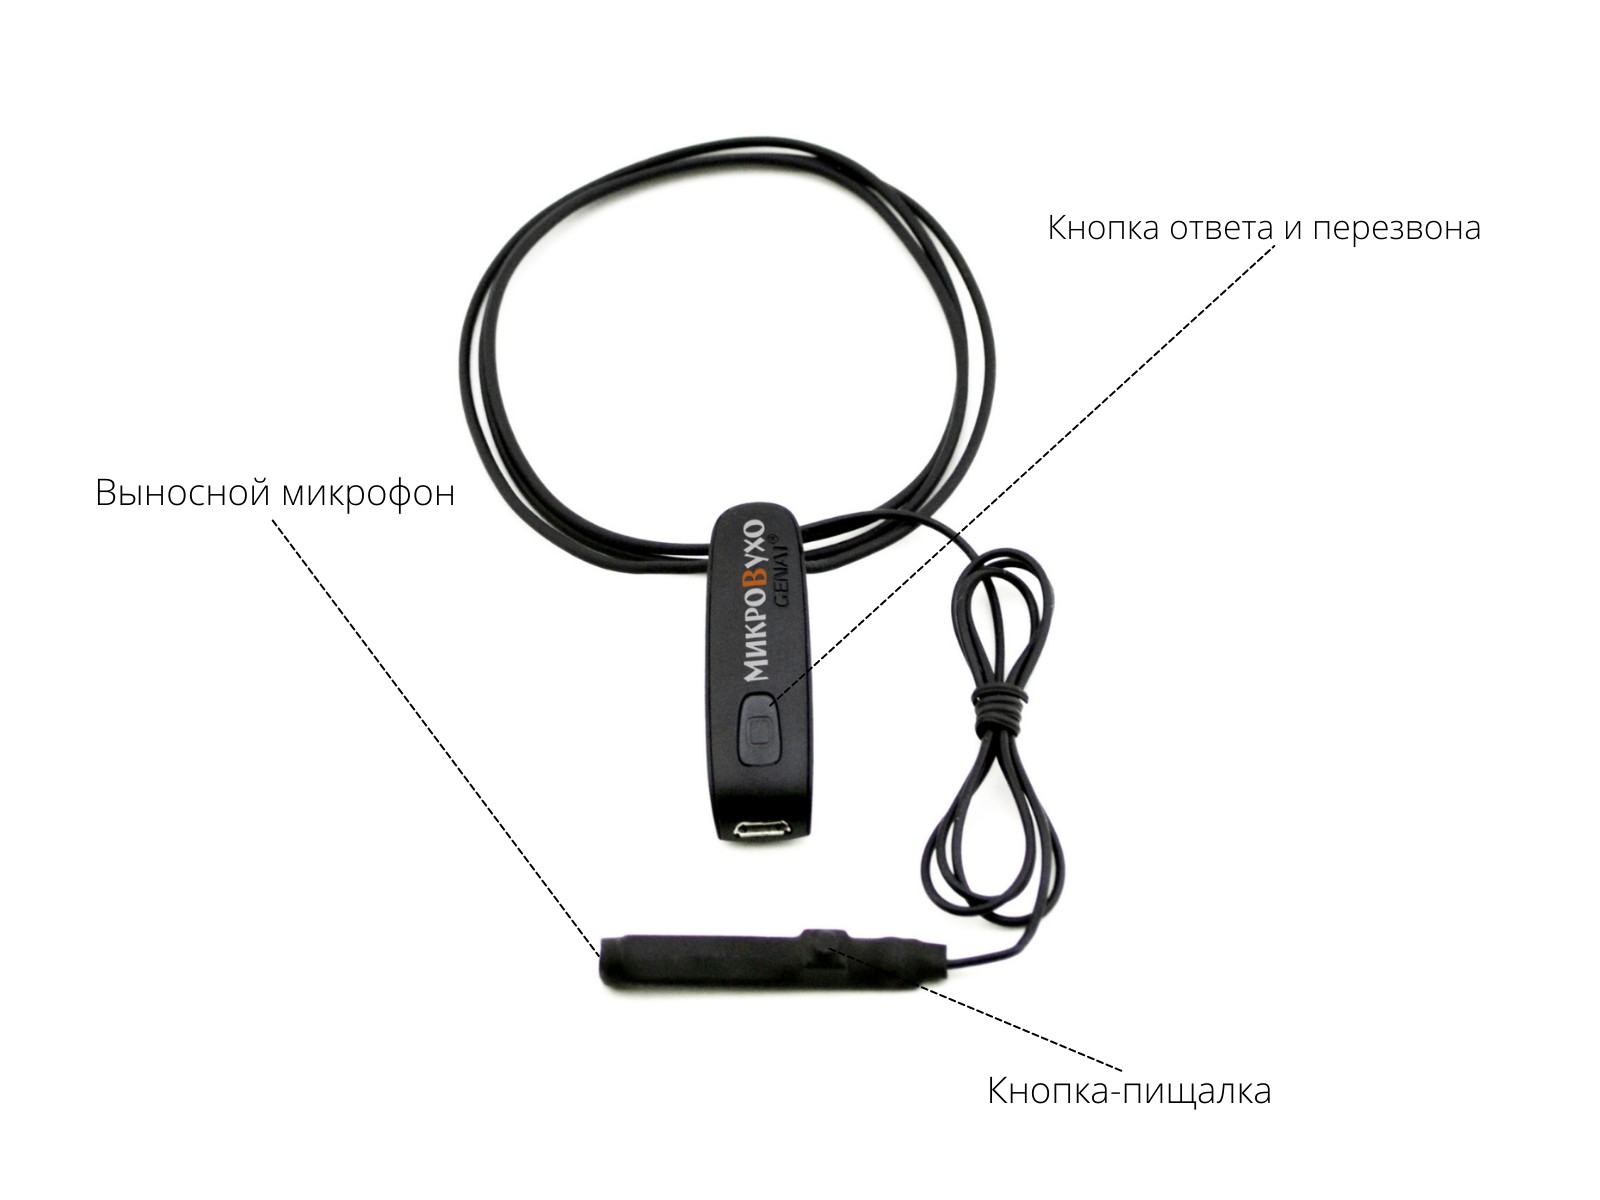 Аренда микронаушника Bluetooth Basic с капсулой K5 4 мм и магнитами 2 мм 4